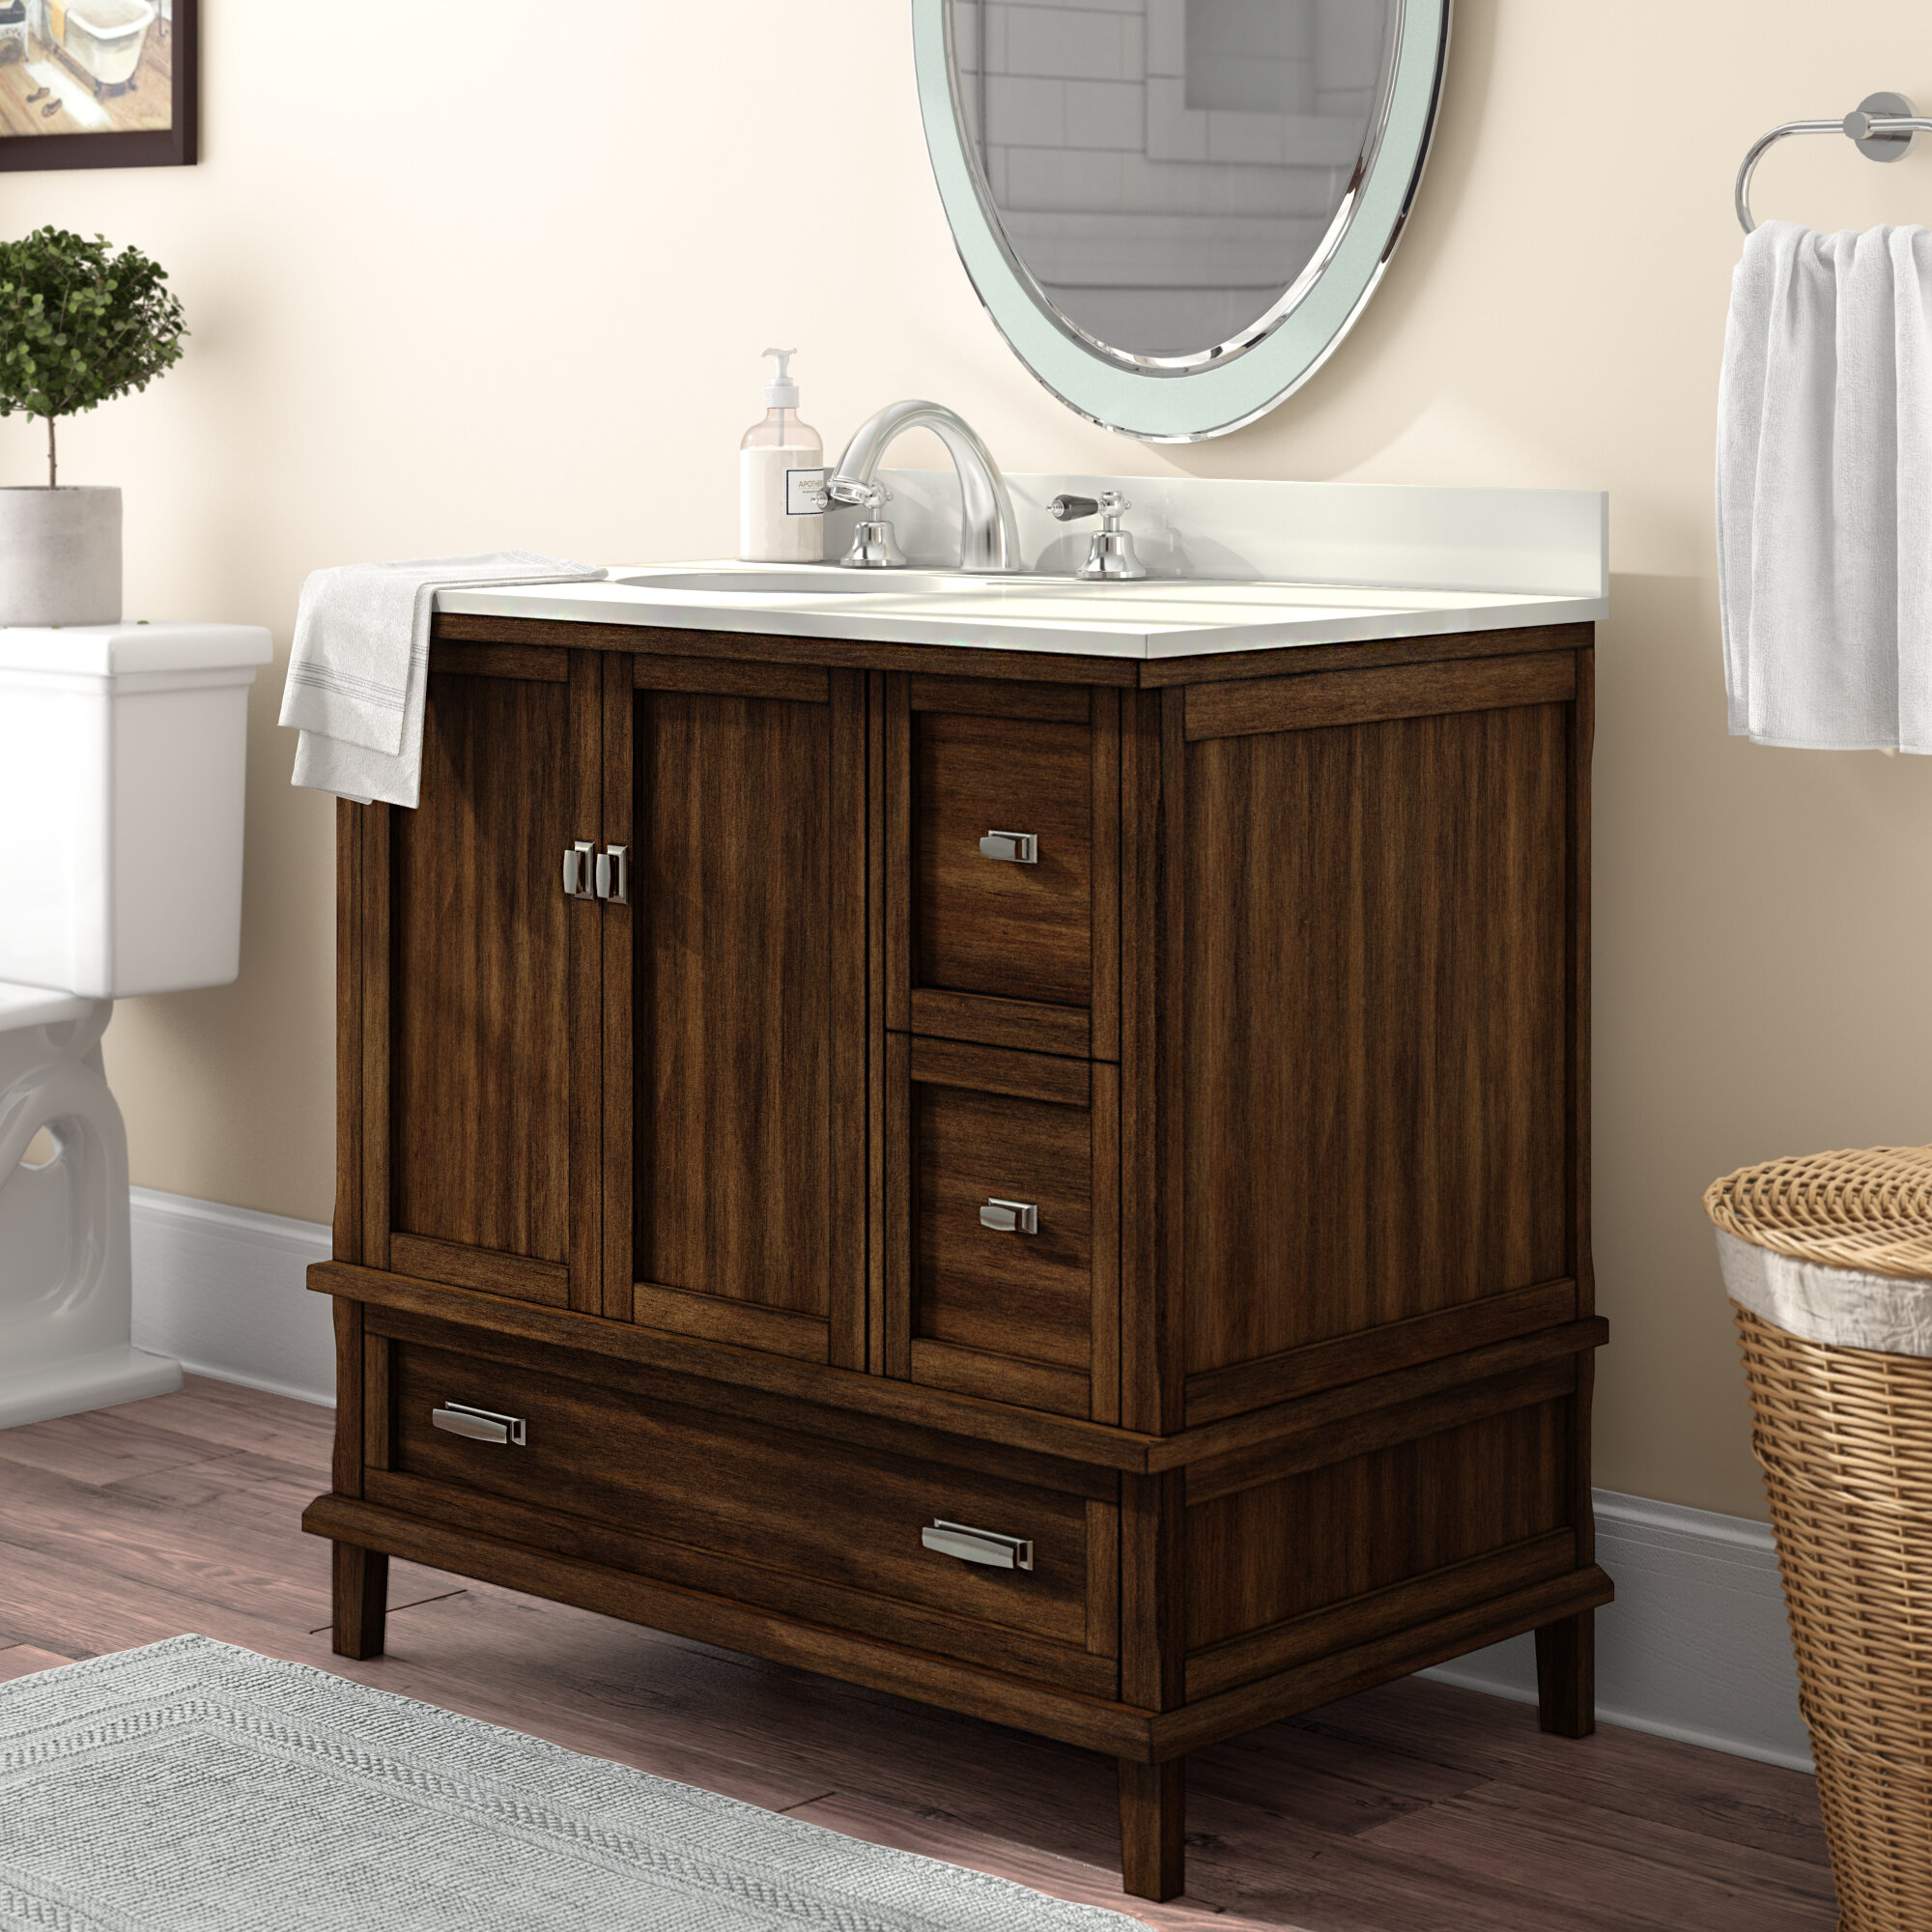 Joss Main Ka 36 Single Bathroom Vanity Set Reviews Wayfairca